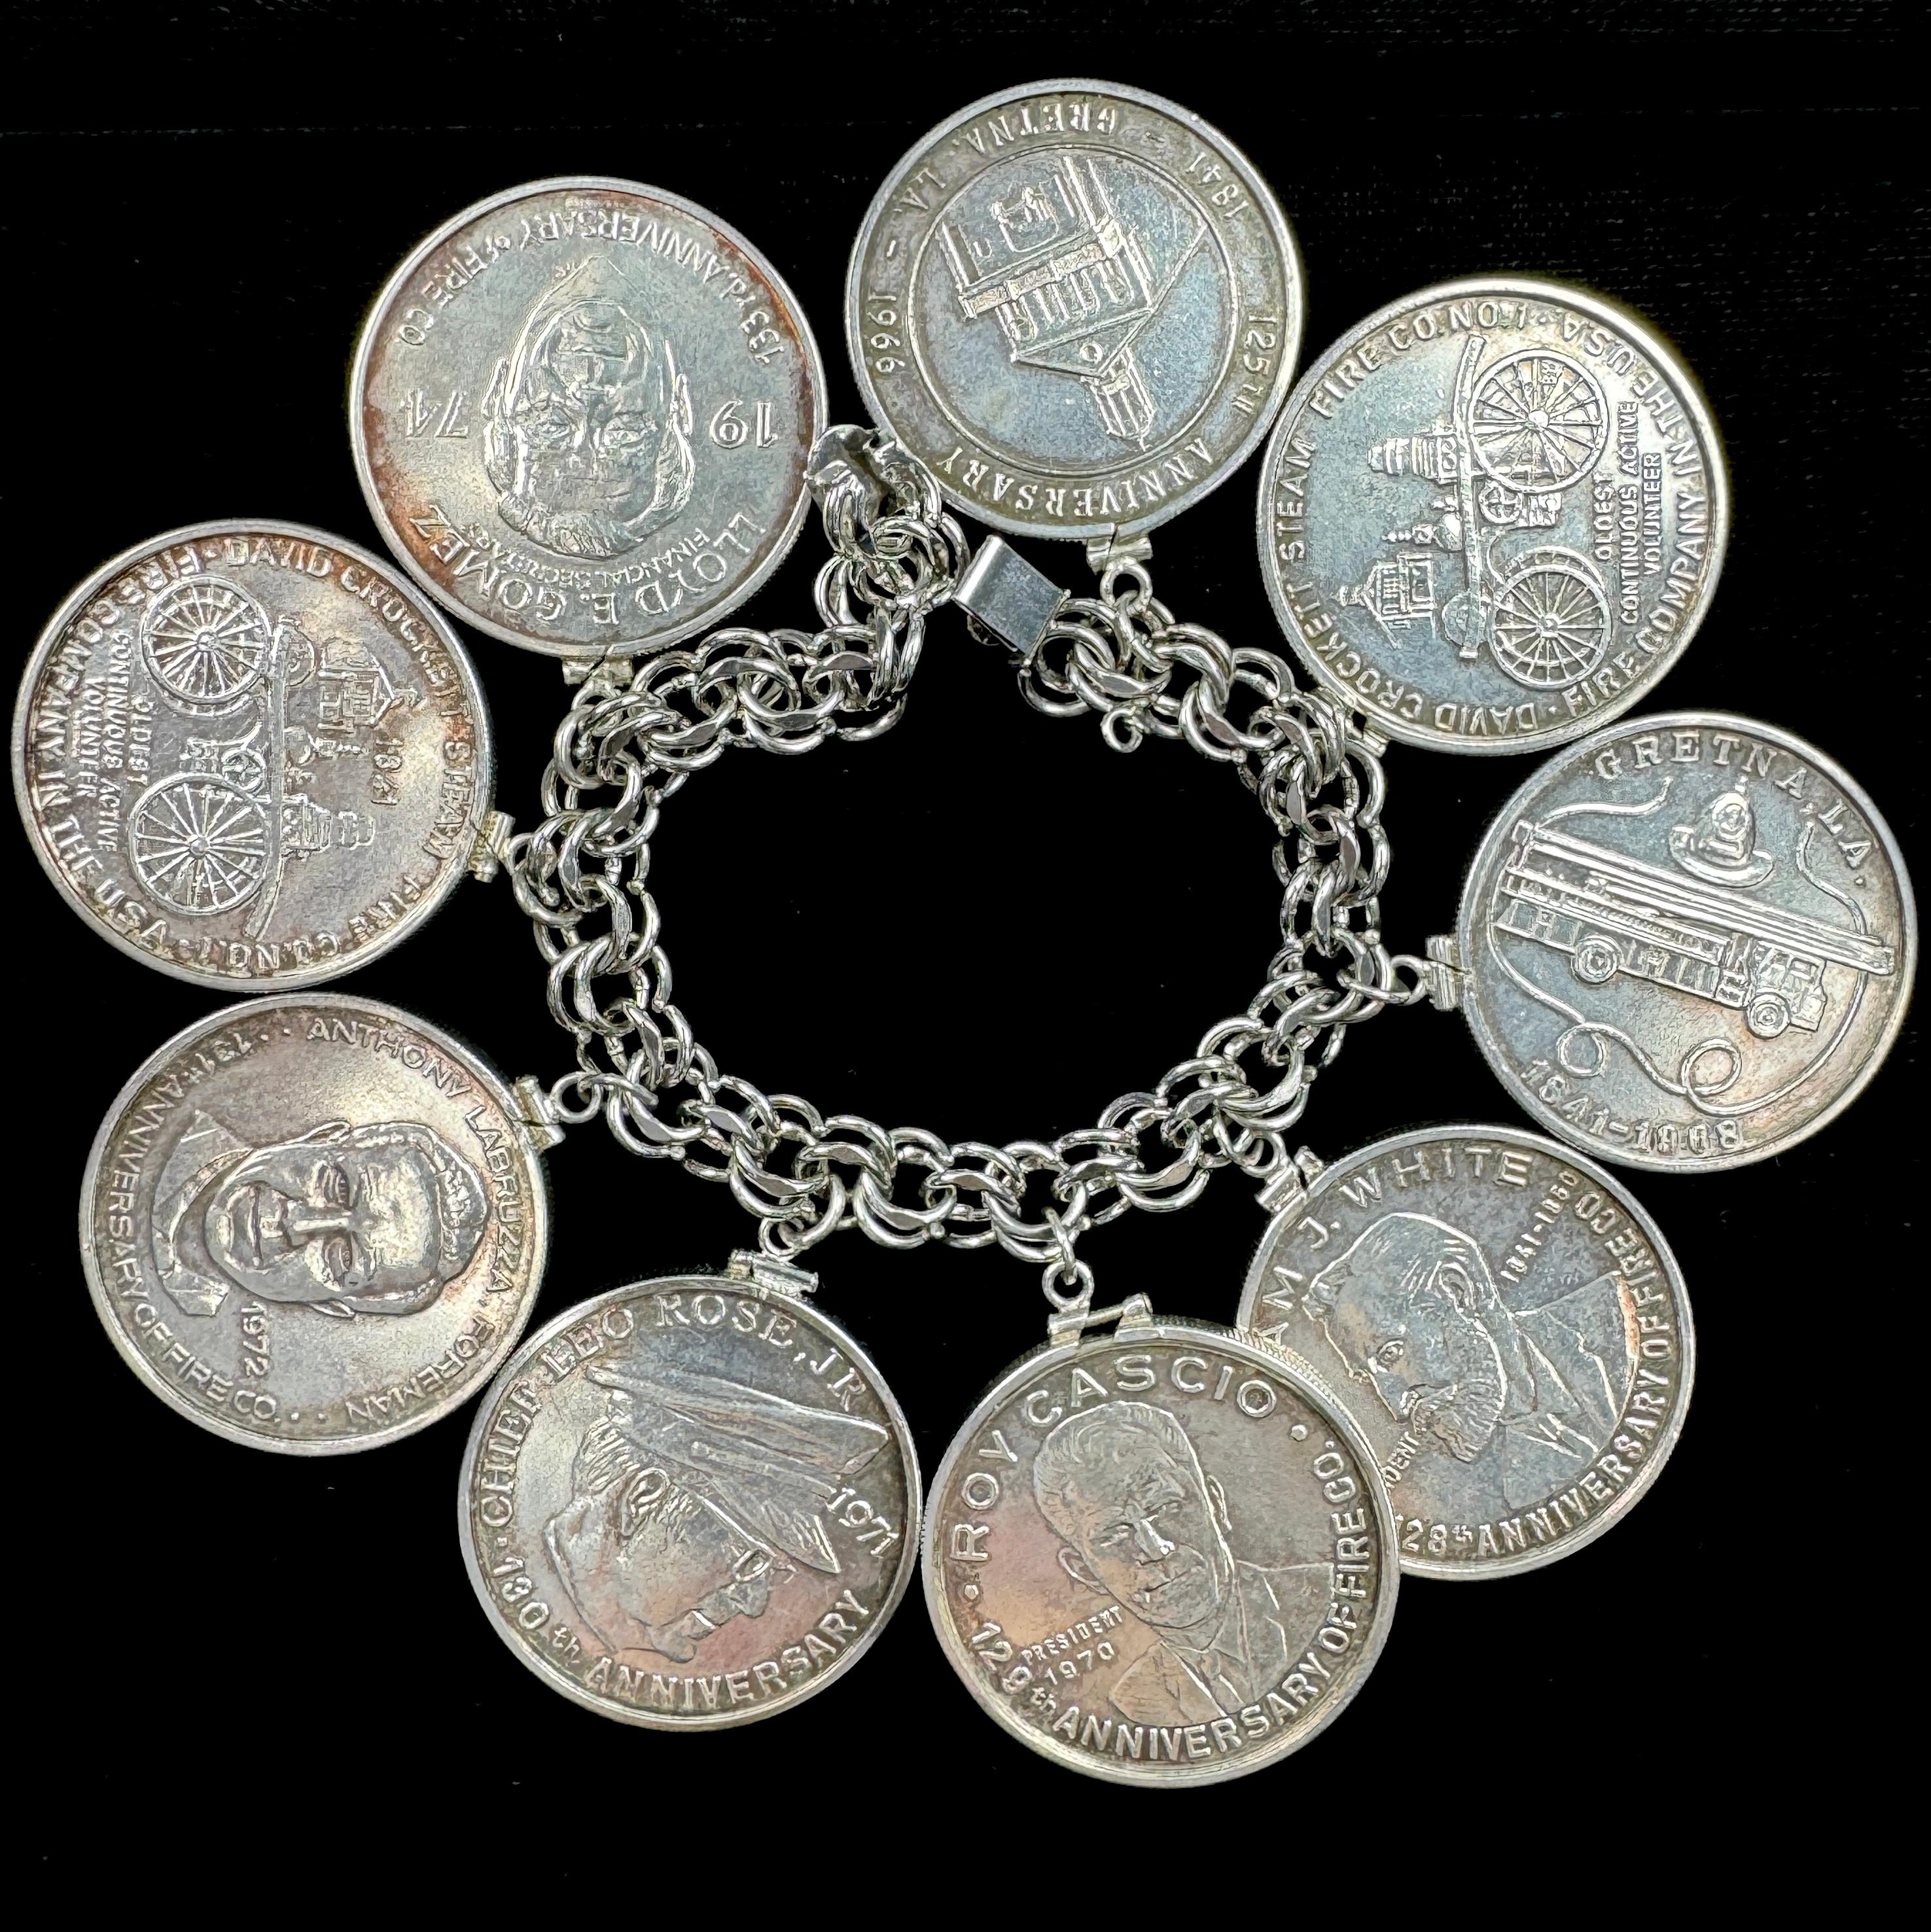 Gretna, LA David Crockett Steam Fire Company No. 1 9-piece .999 silver commemorative medal set